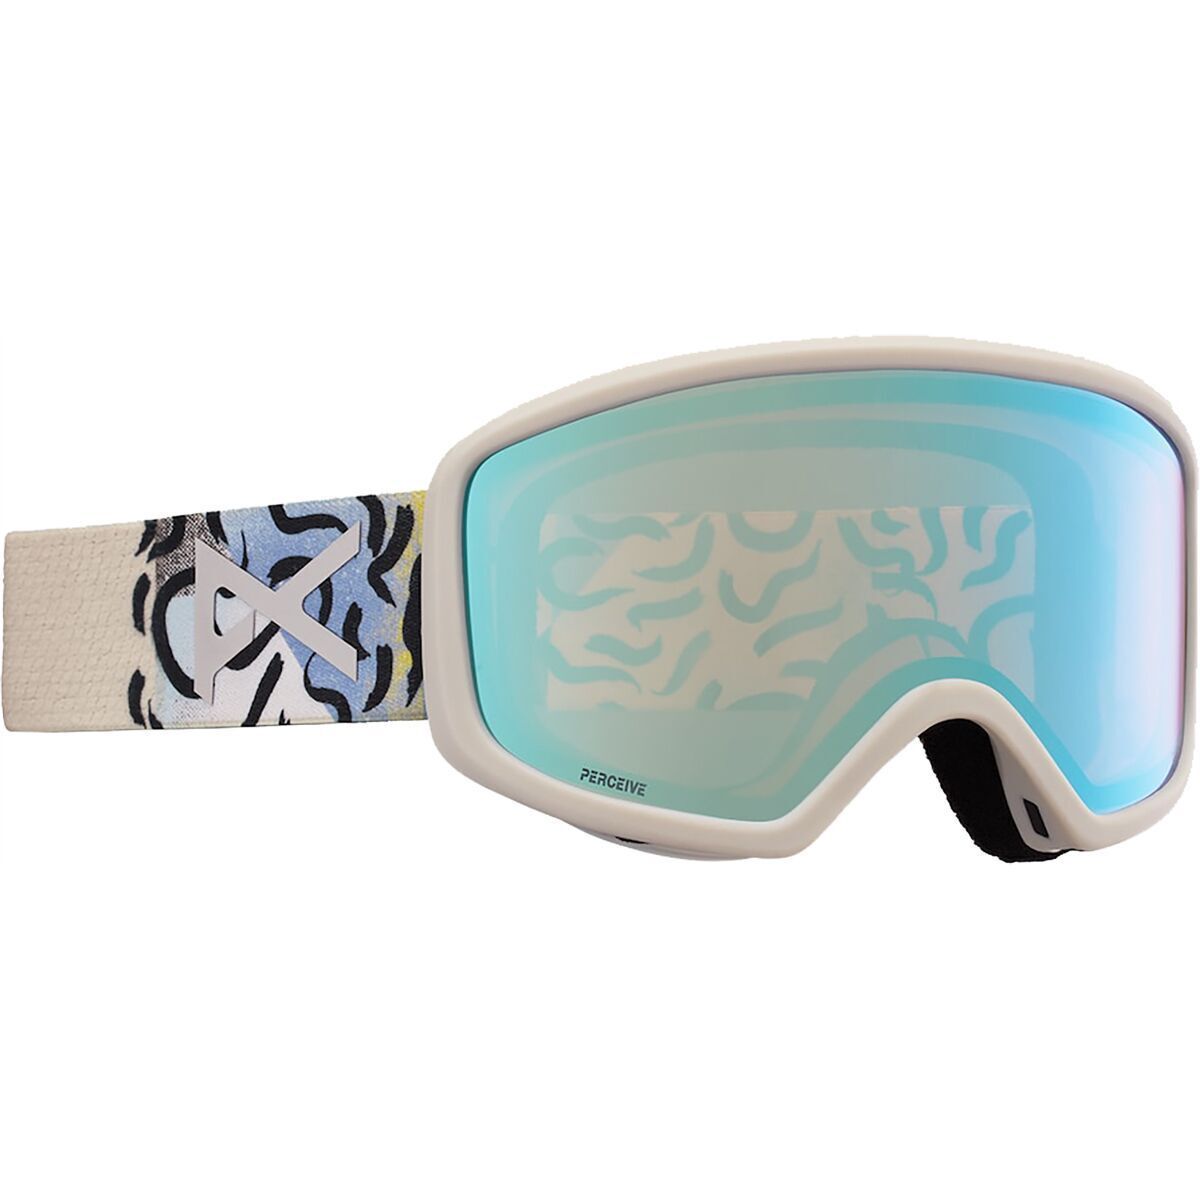 Anon WM1 Goggles + Bonus Lens + MFI Face Mask - Asian Fit Powder / Perceive Variable Blue Snow Goggles